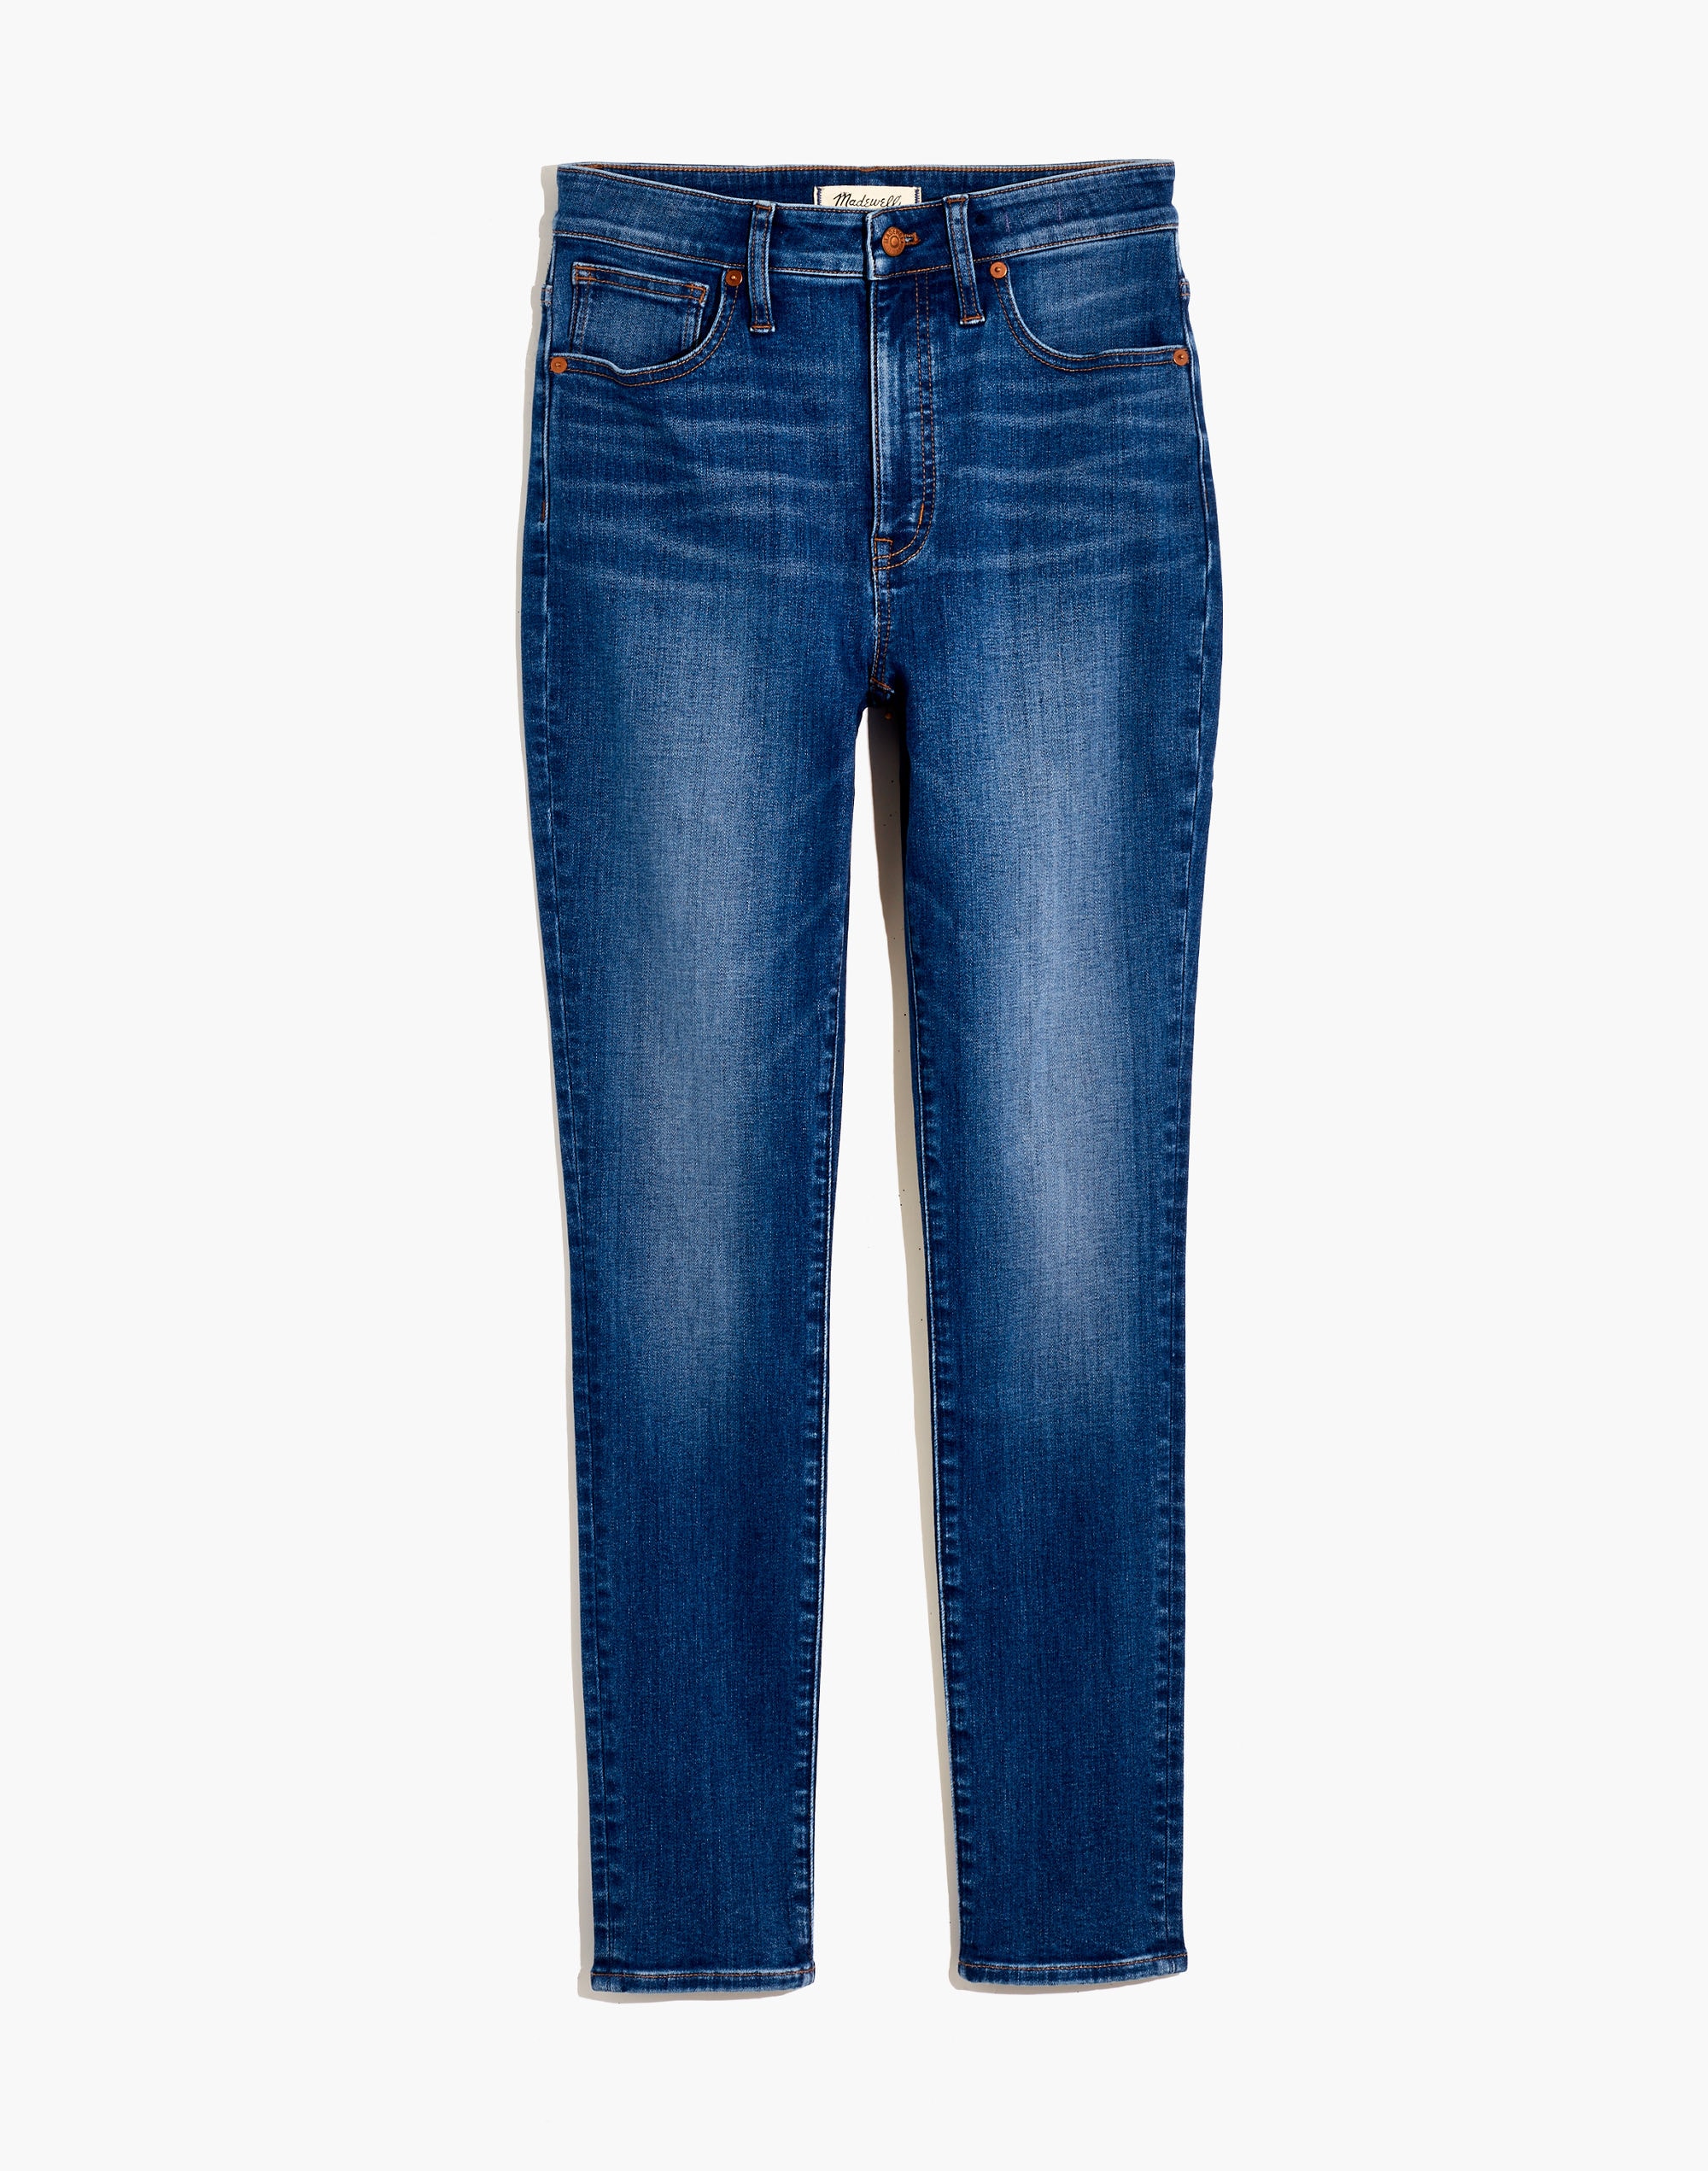 Tall Curvy High-Rise Skinny Jeans in Bradshaw Wash